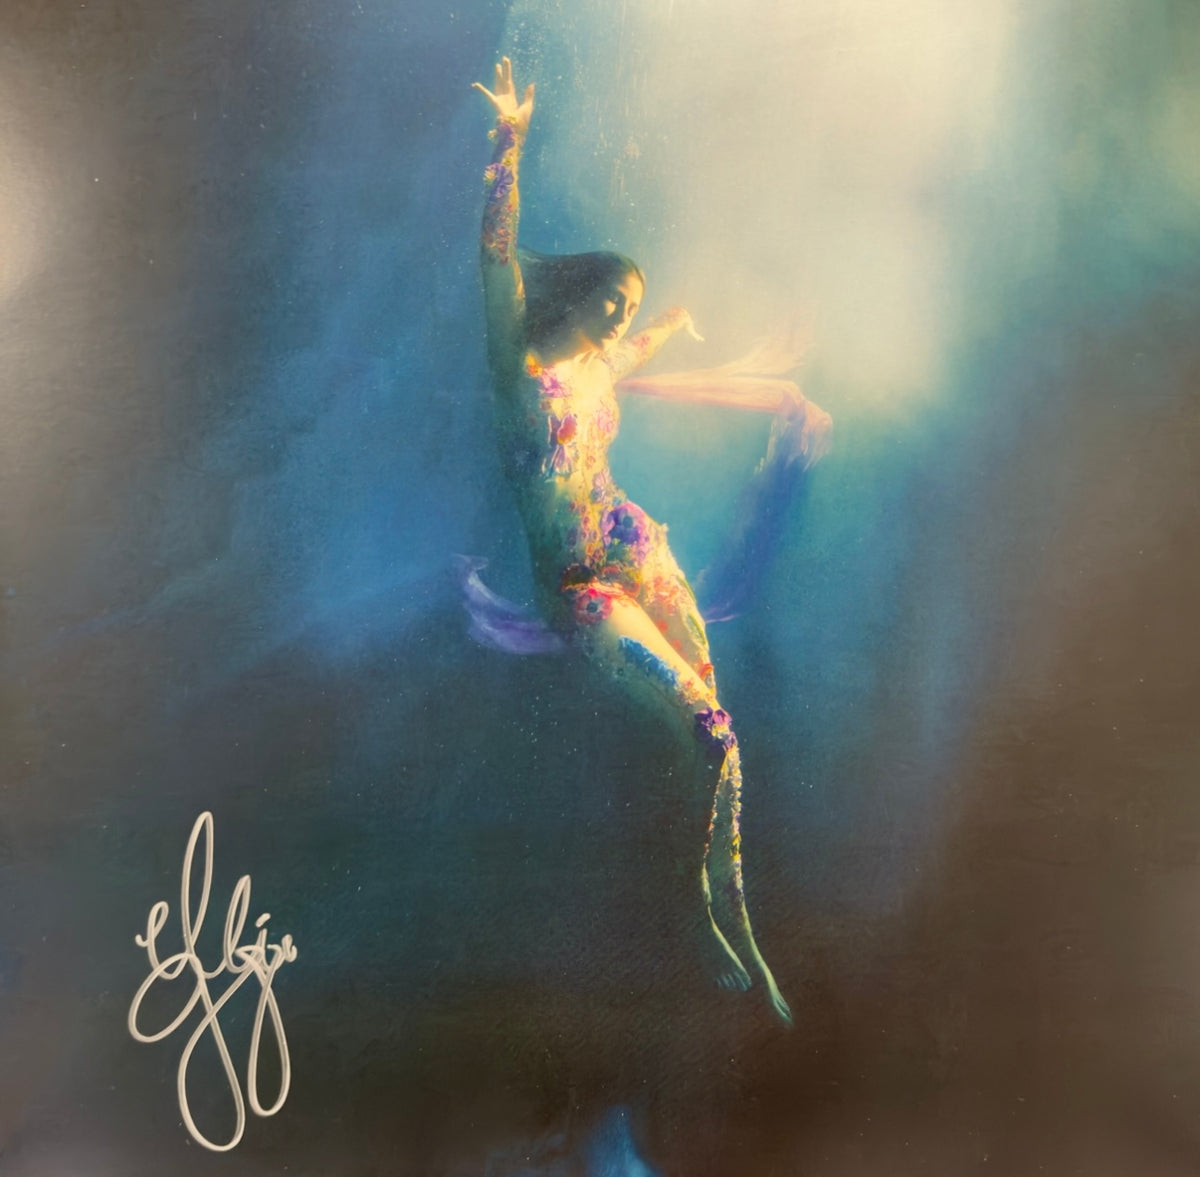 Ellie Goulding – Higher Than Heaven - signed insert